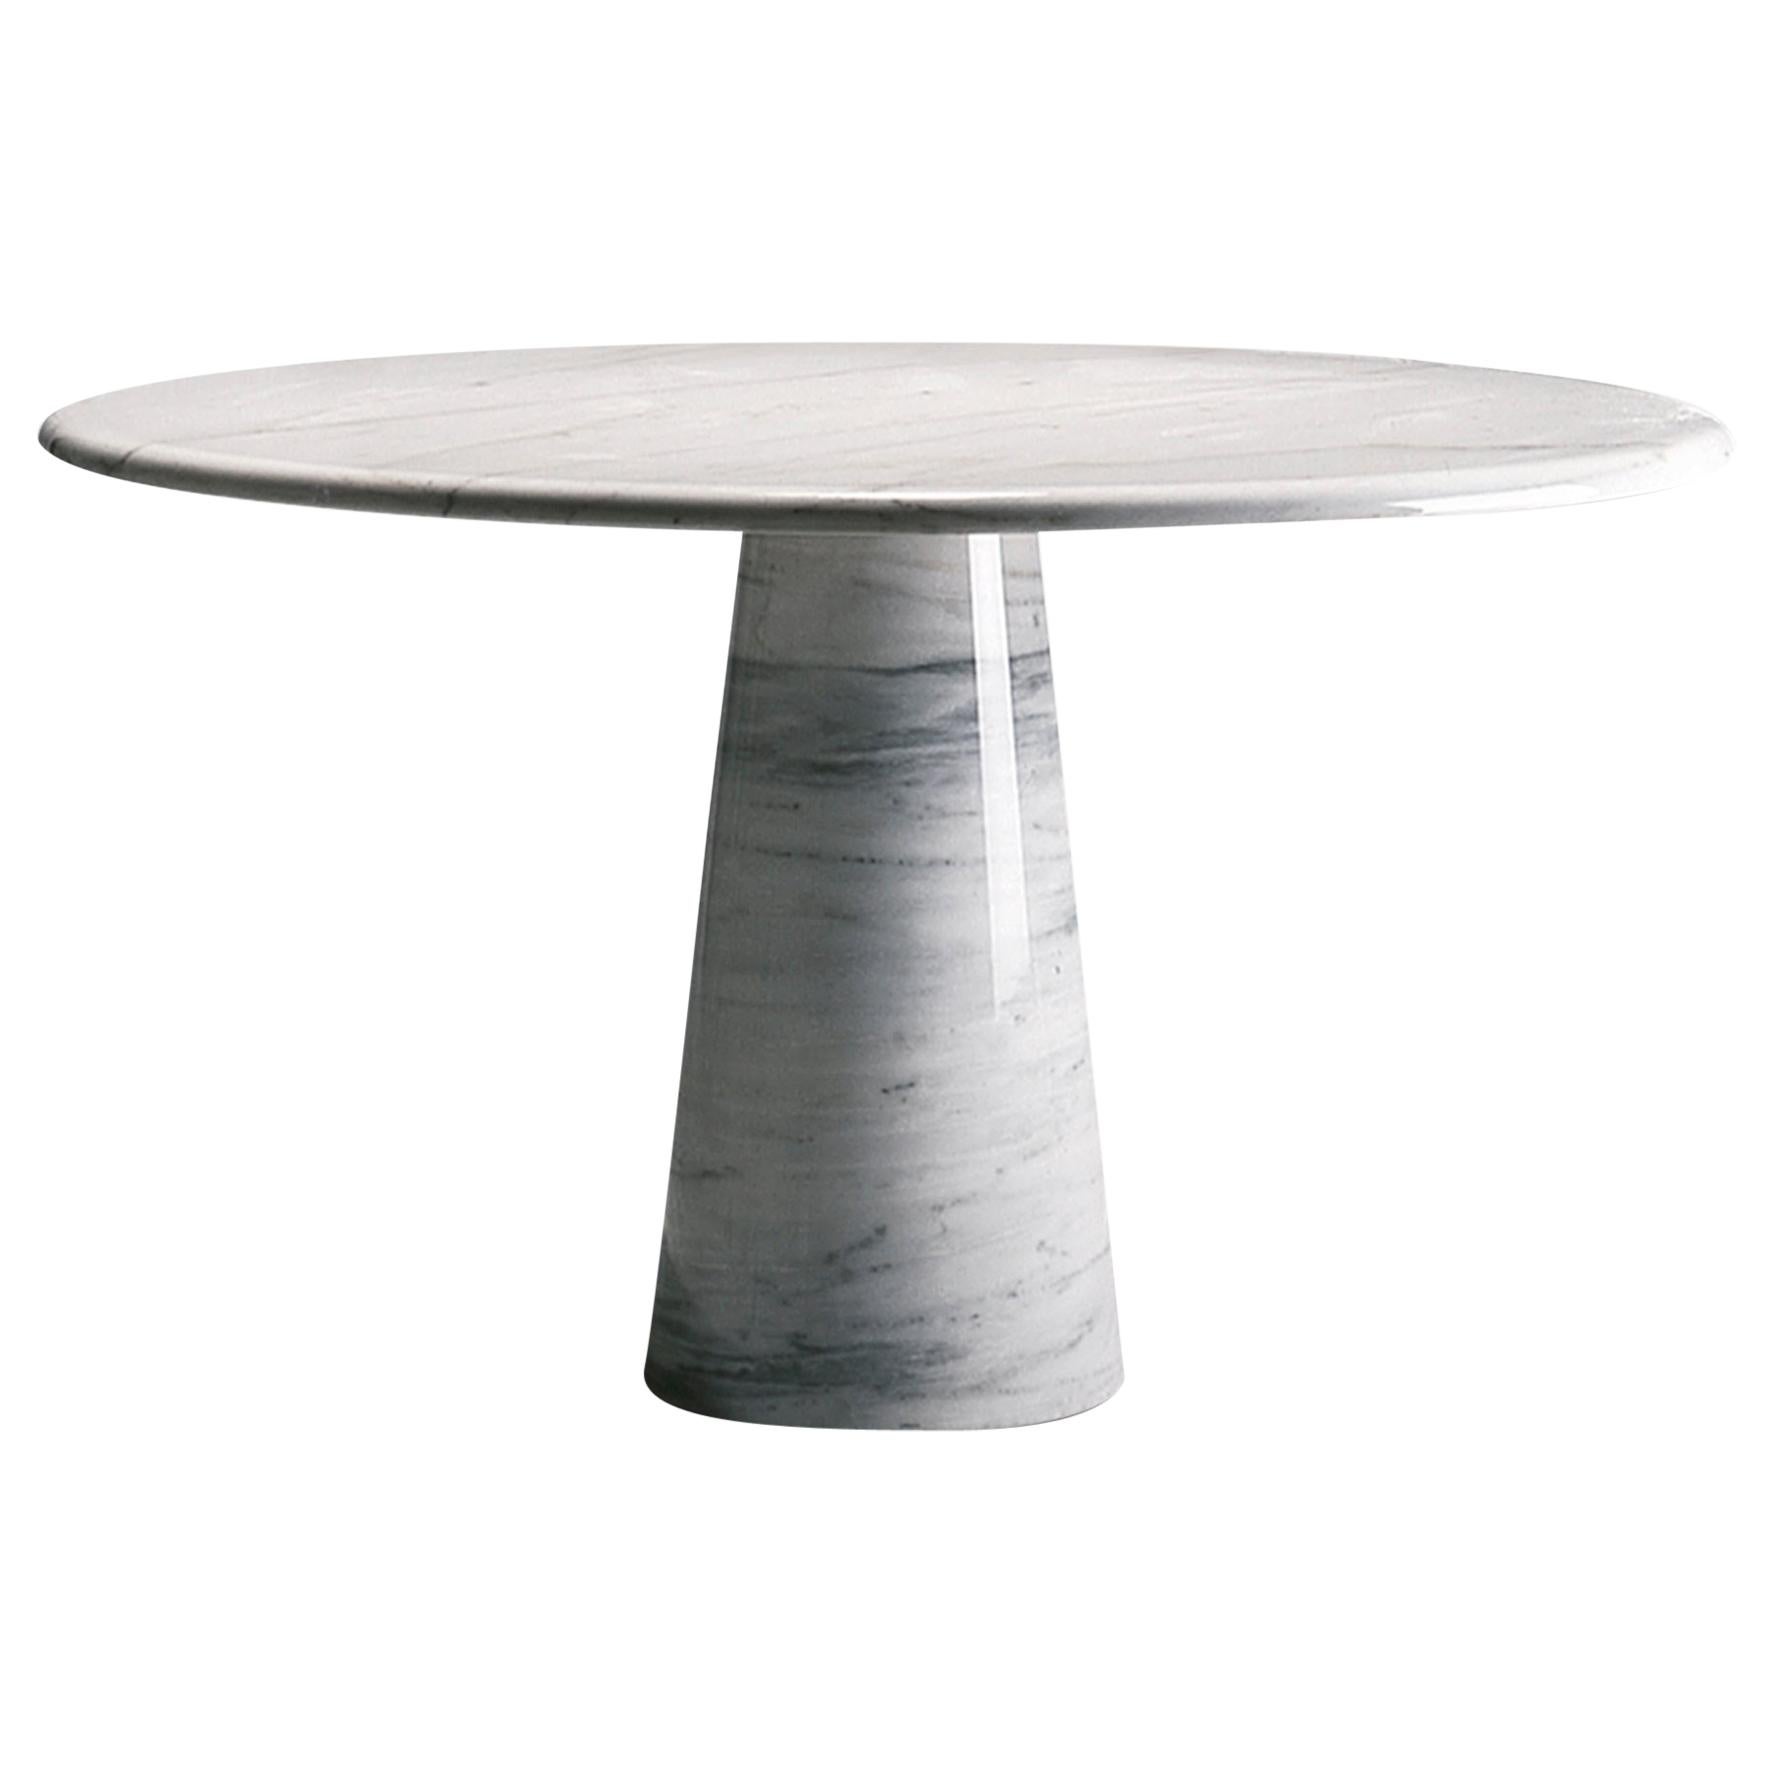 'Colonnata' Round Dining Table D130 by Giusti & Di Rosa, White Carrara Marble